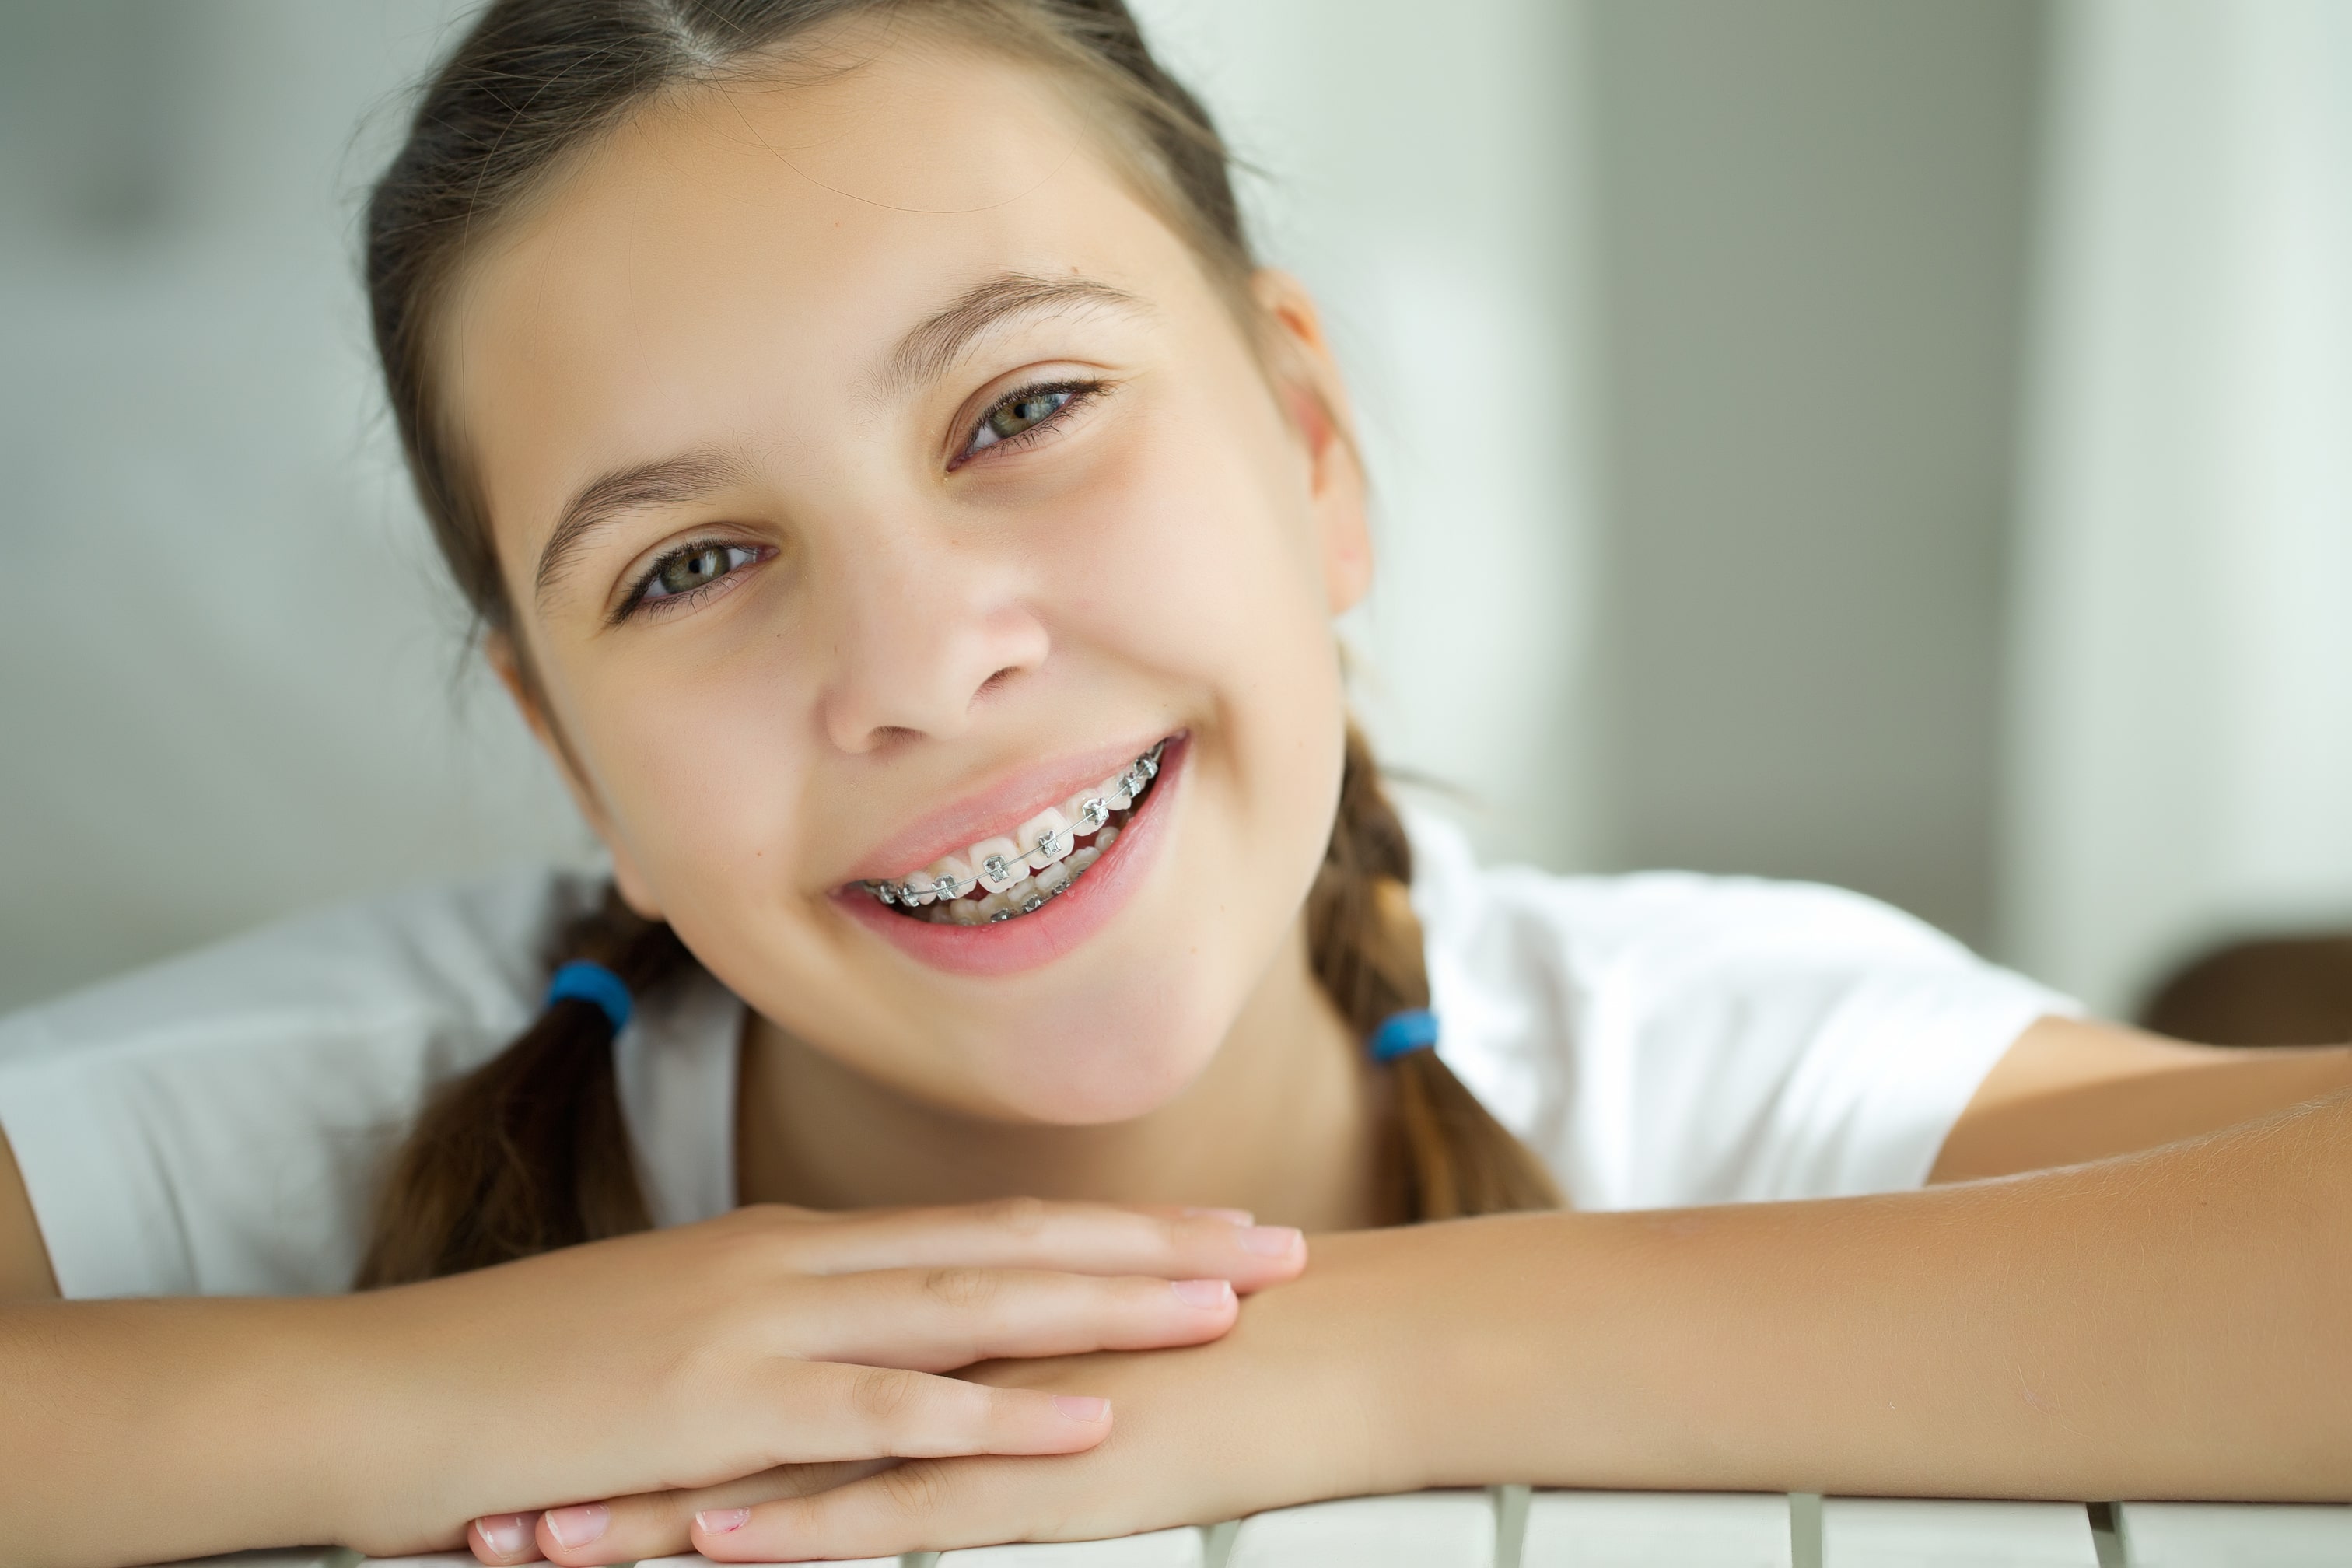 Does My Child Need Braces? | Orthodontics in London